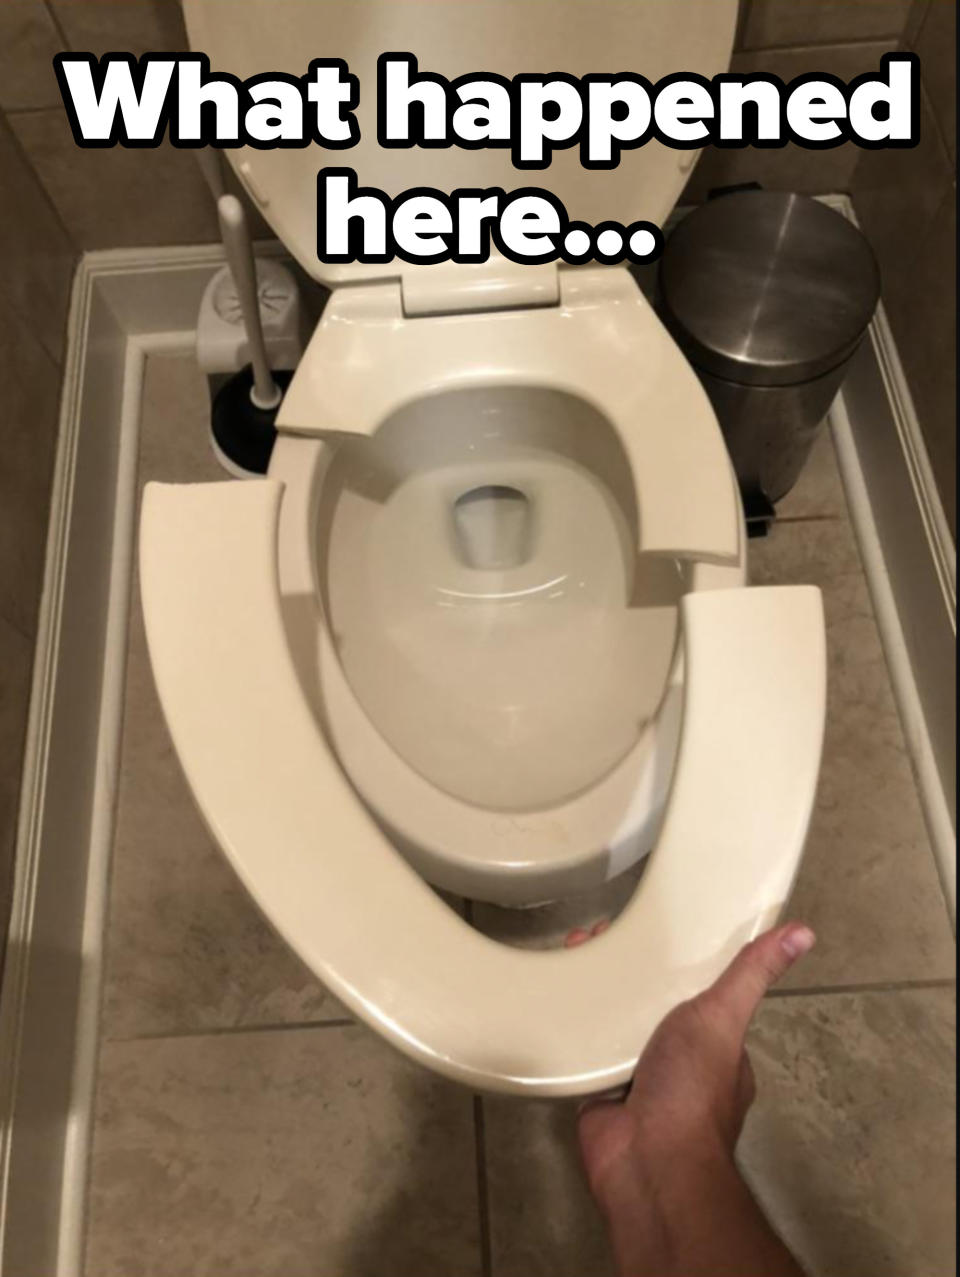 A toilet seat broken in half